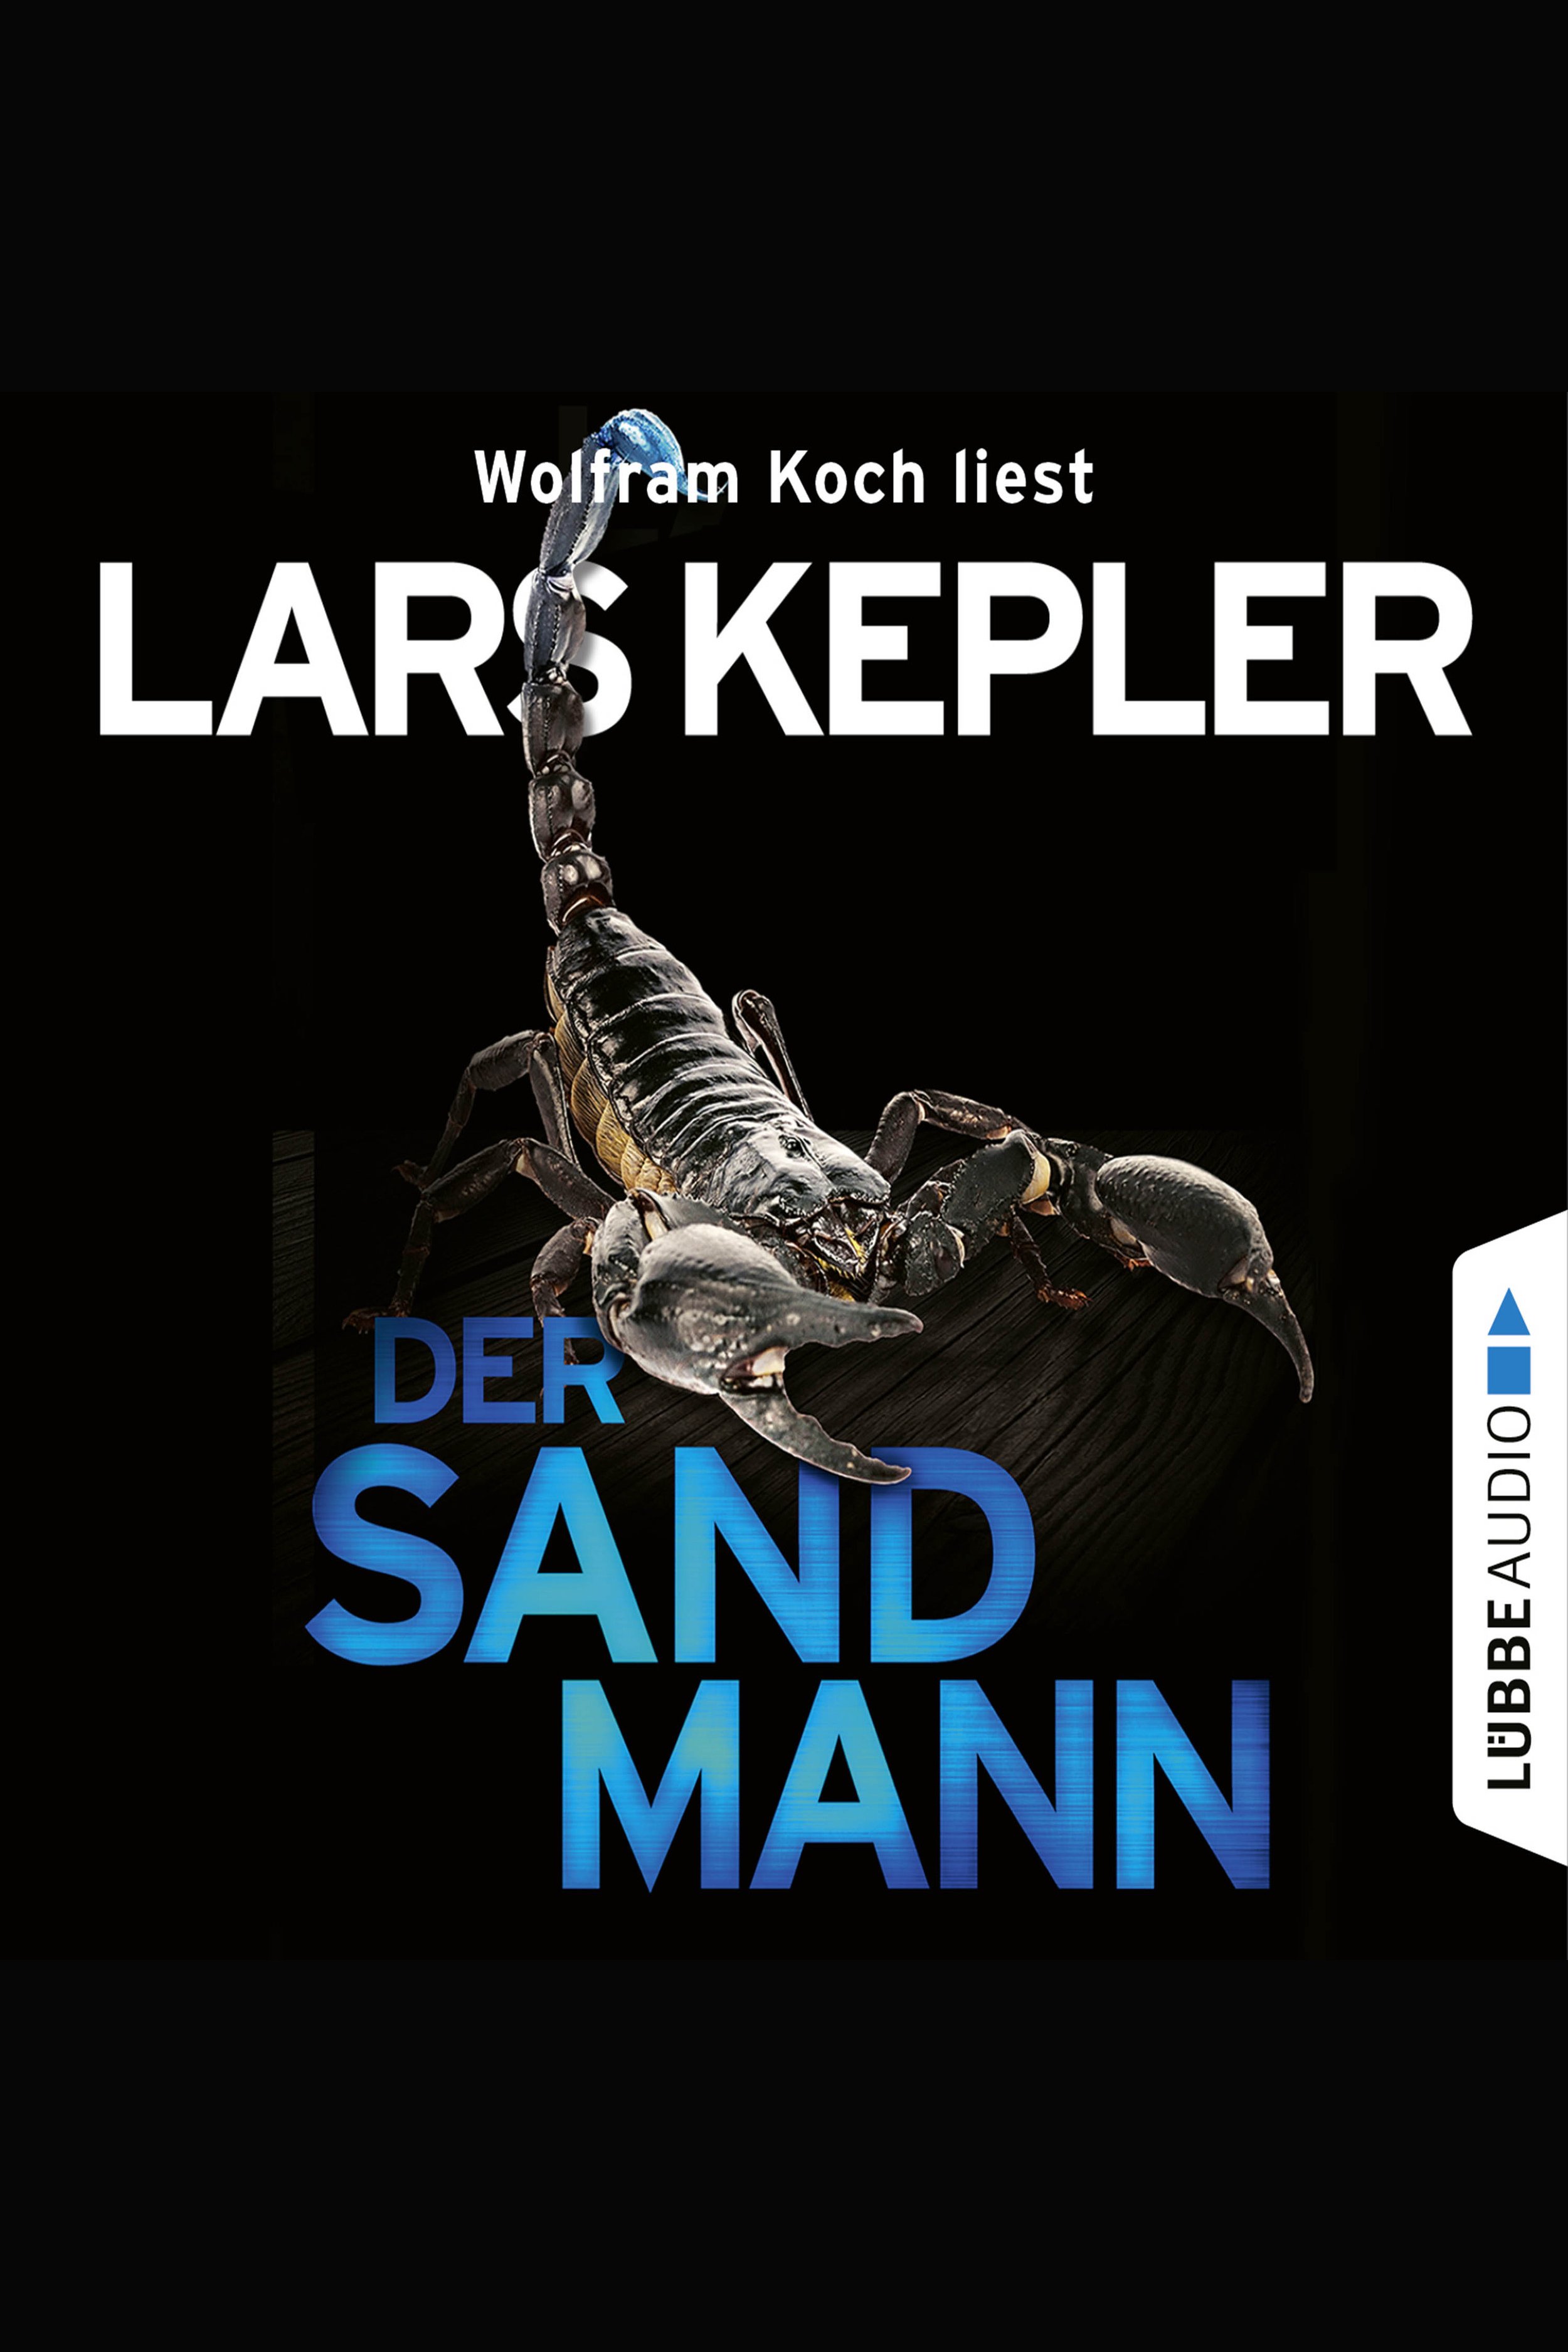 Der Sandmann cover image